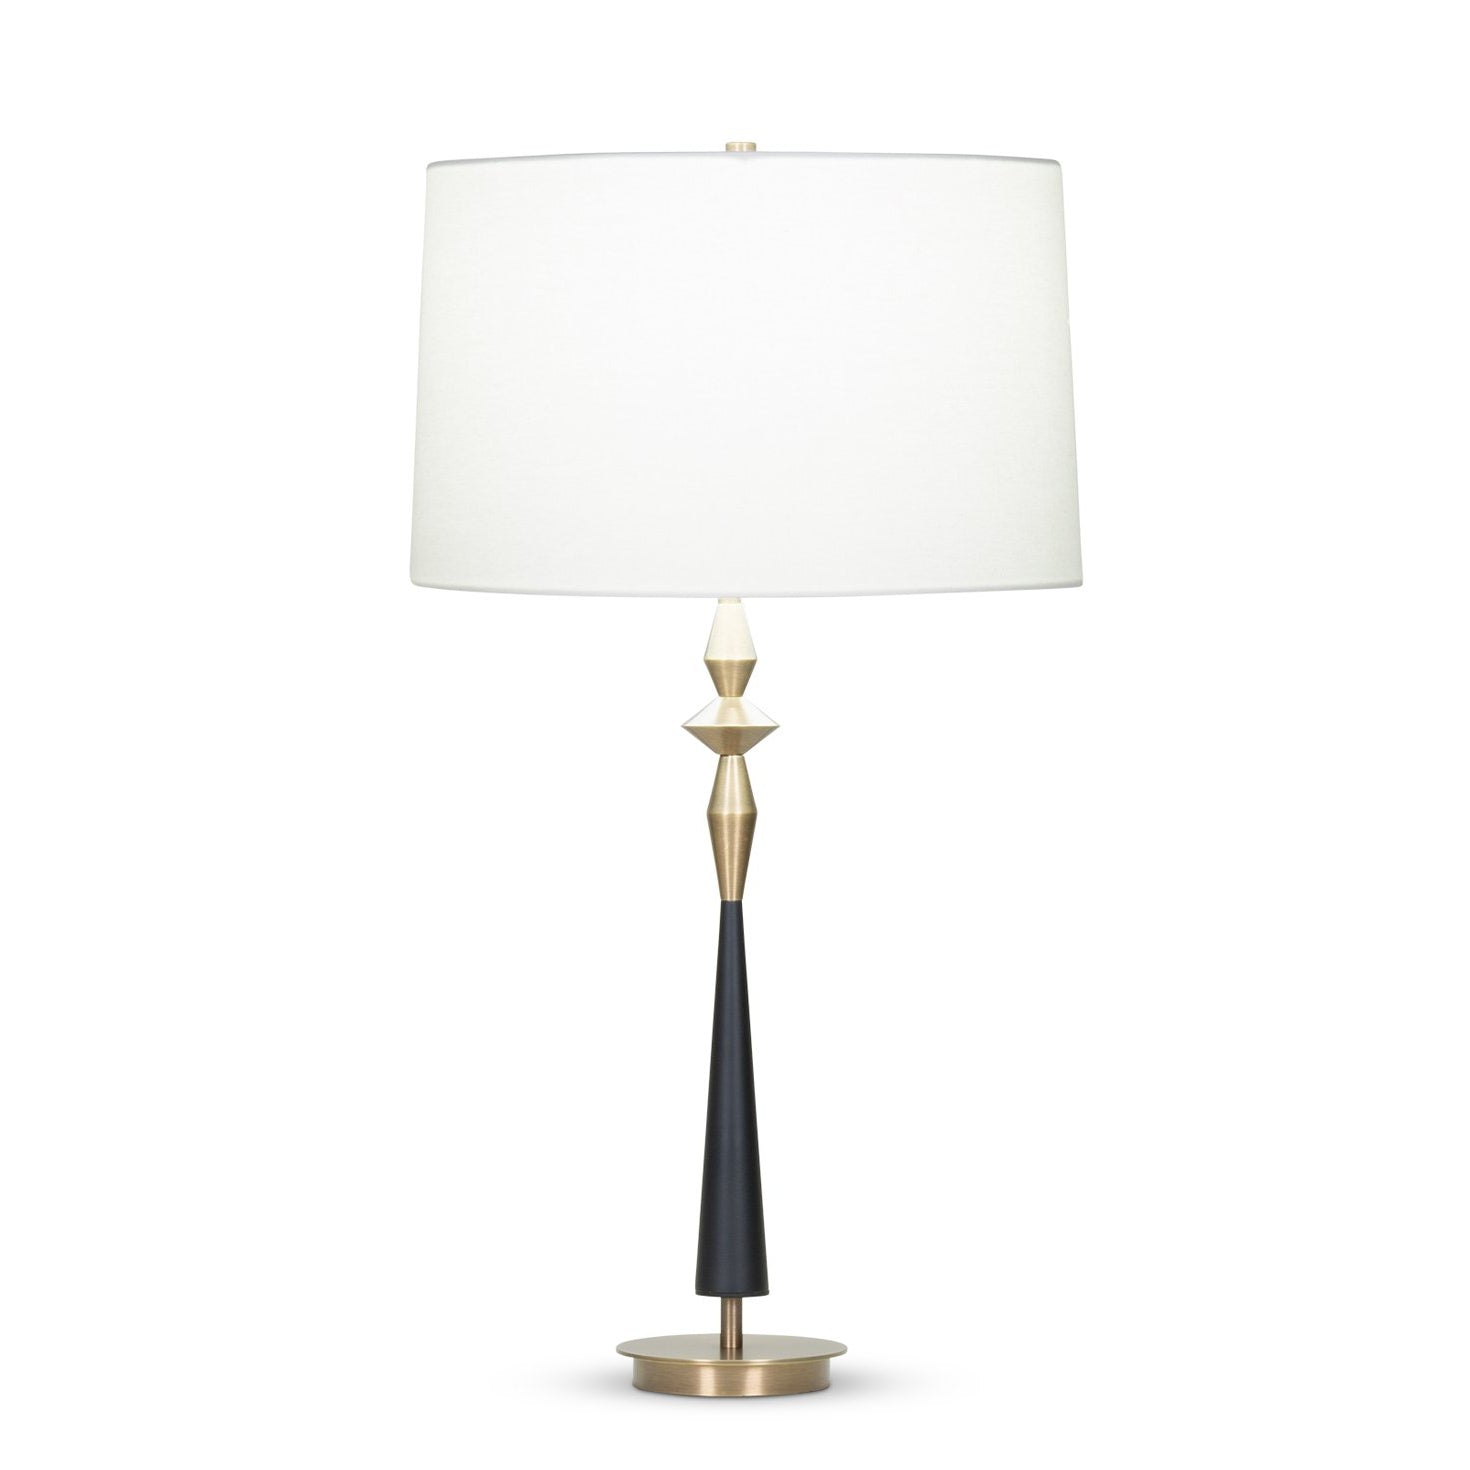 Morrison Table Lamp